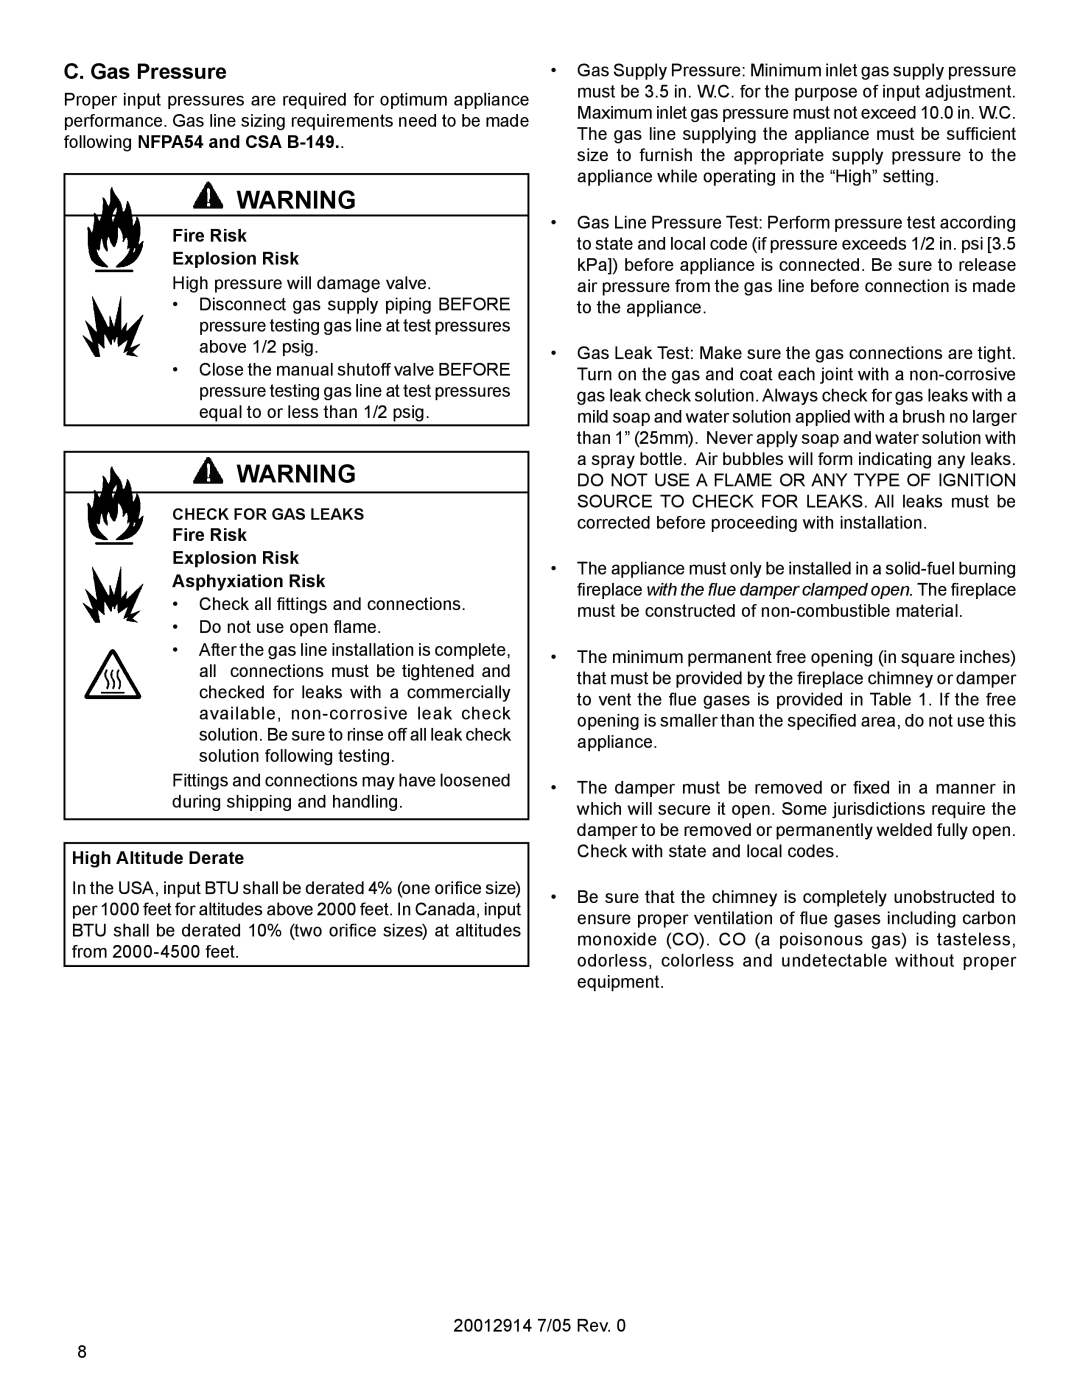 Vermont Casting MO18 C. Gas Pressure, Fire Risk Explosion Risk Asphyxiation Risk, High Altitude Derate 